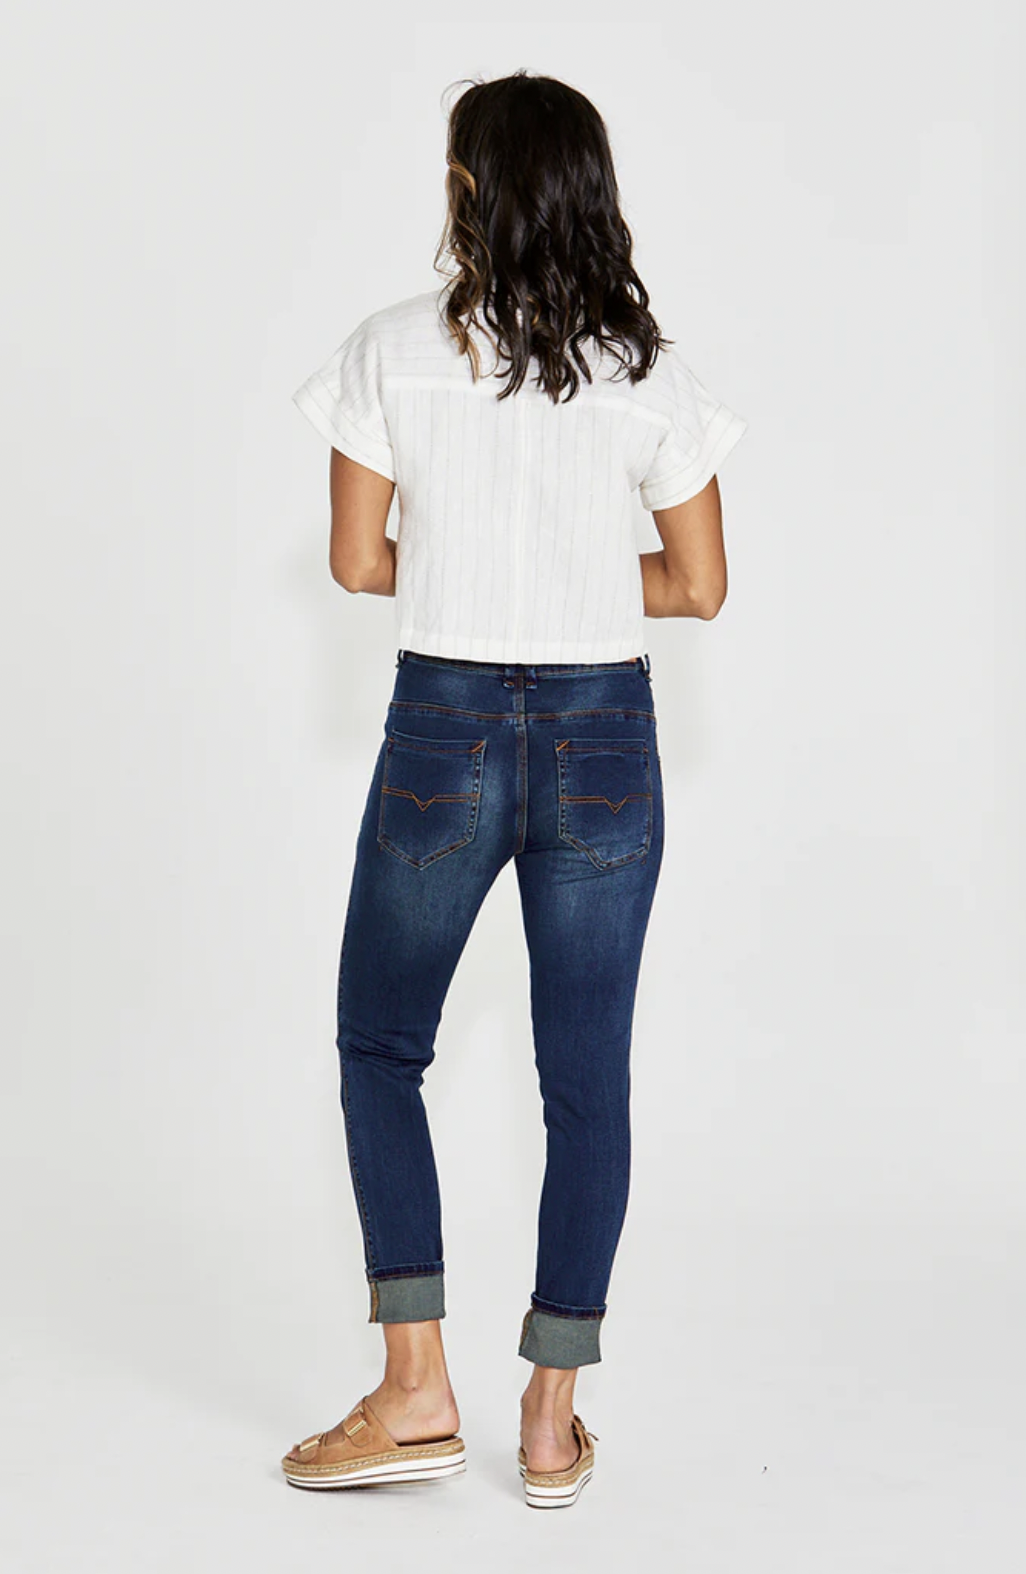 Pinner Jeans - katyamaker